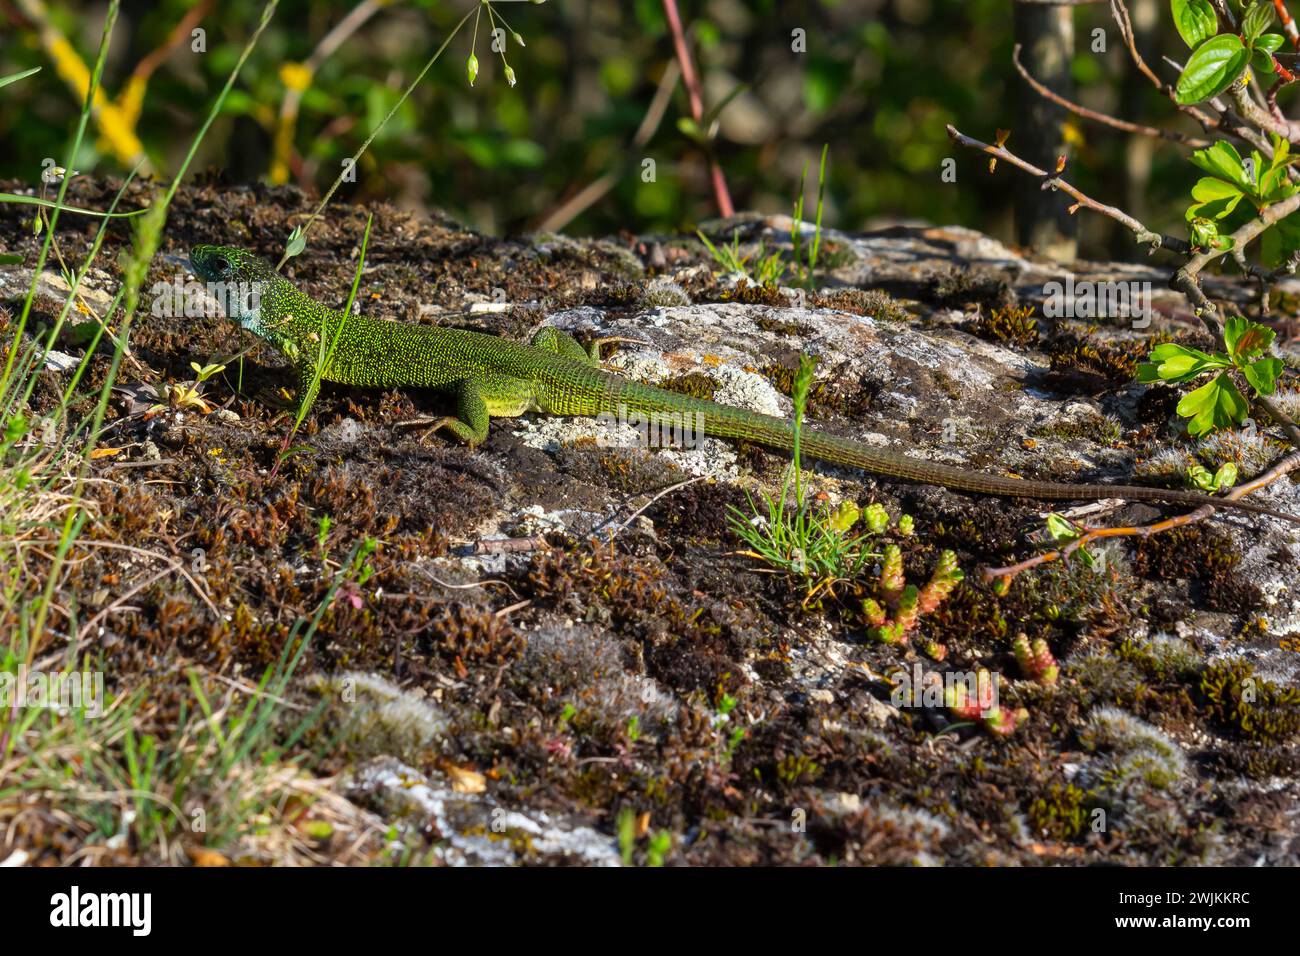 European green lizard Lacerta viridis emerging from the grass exposing its beautiful colors. Stock Photo